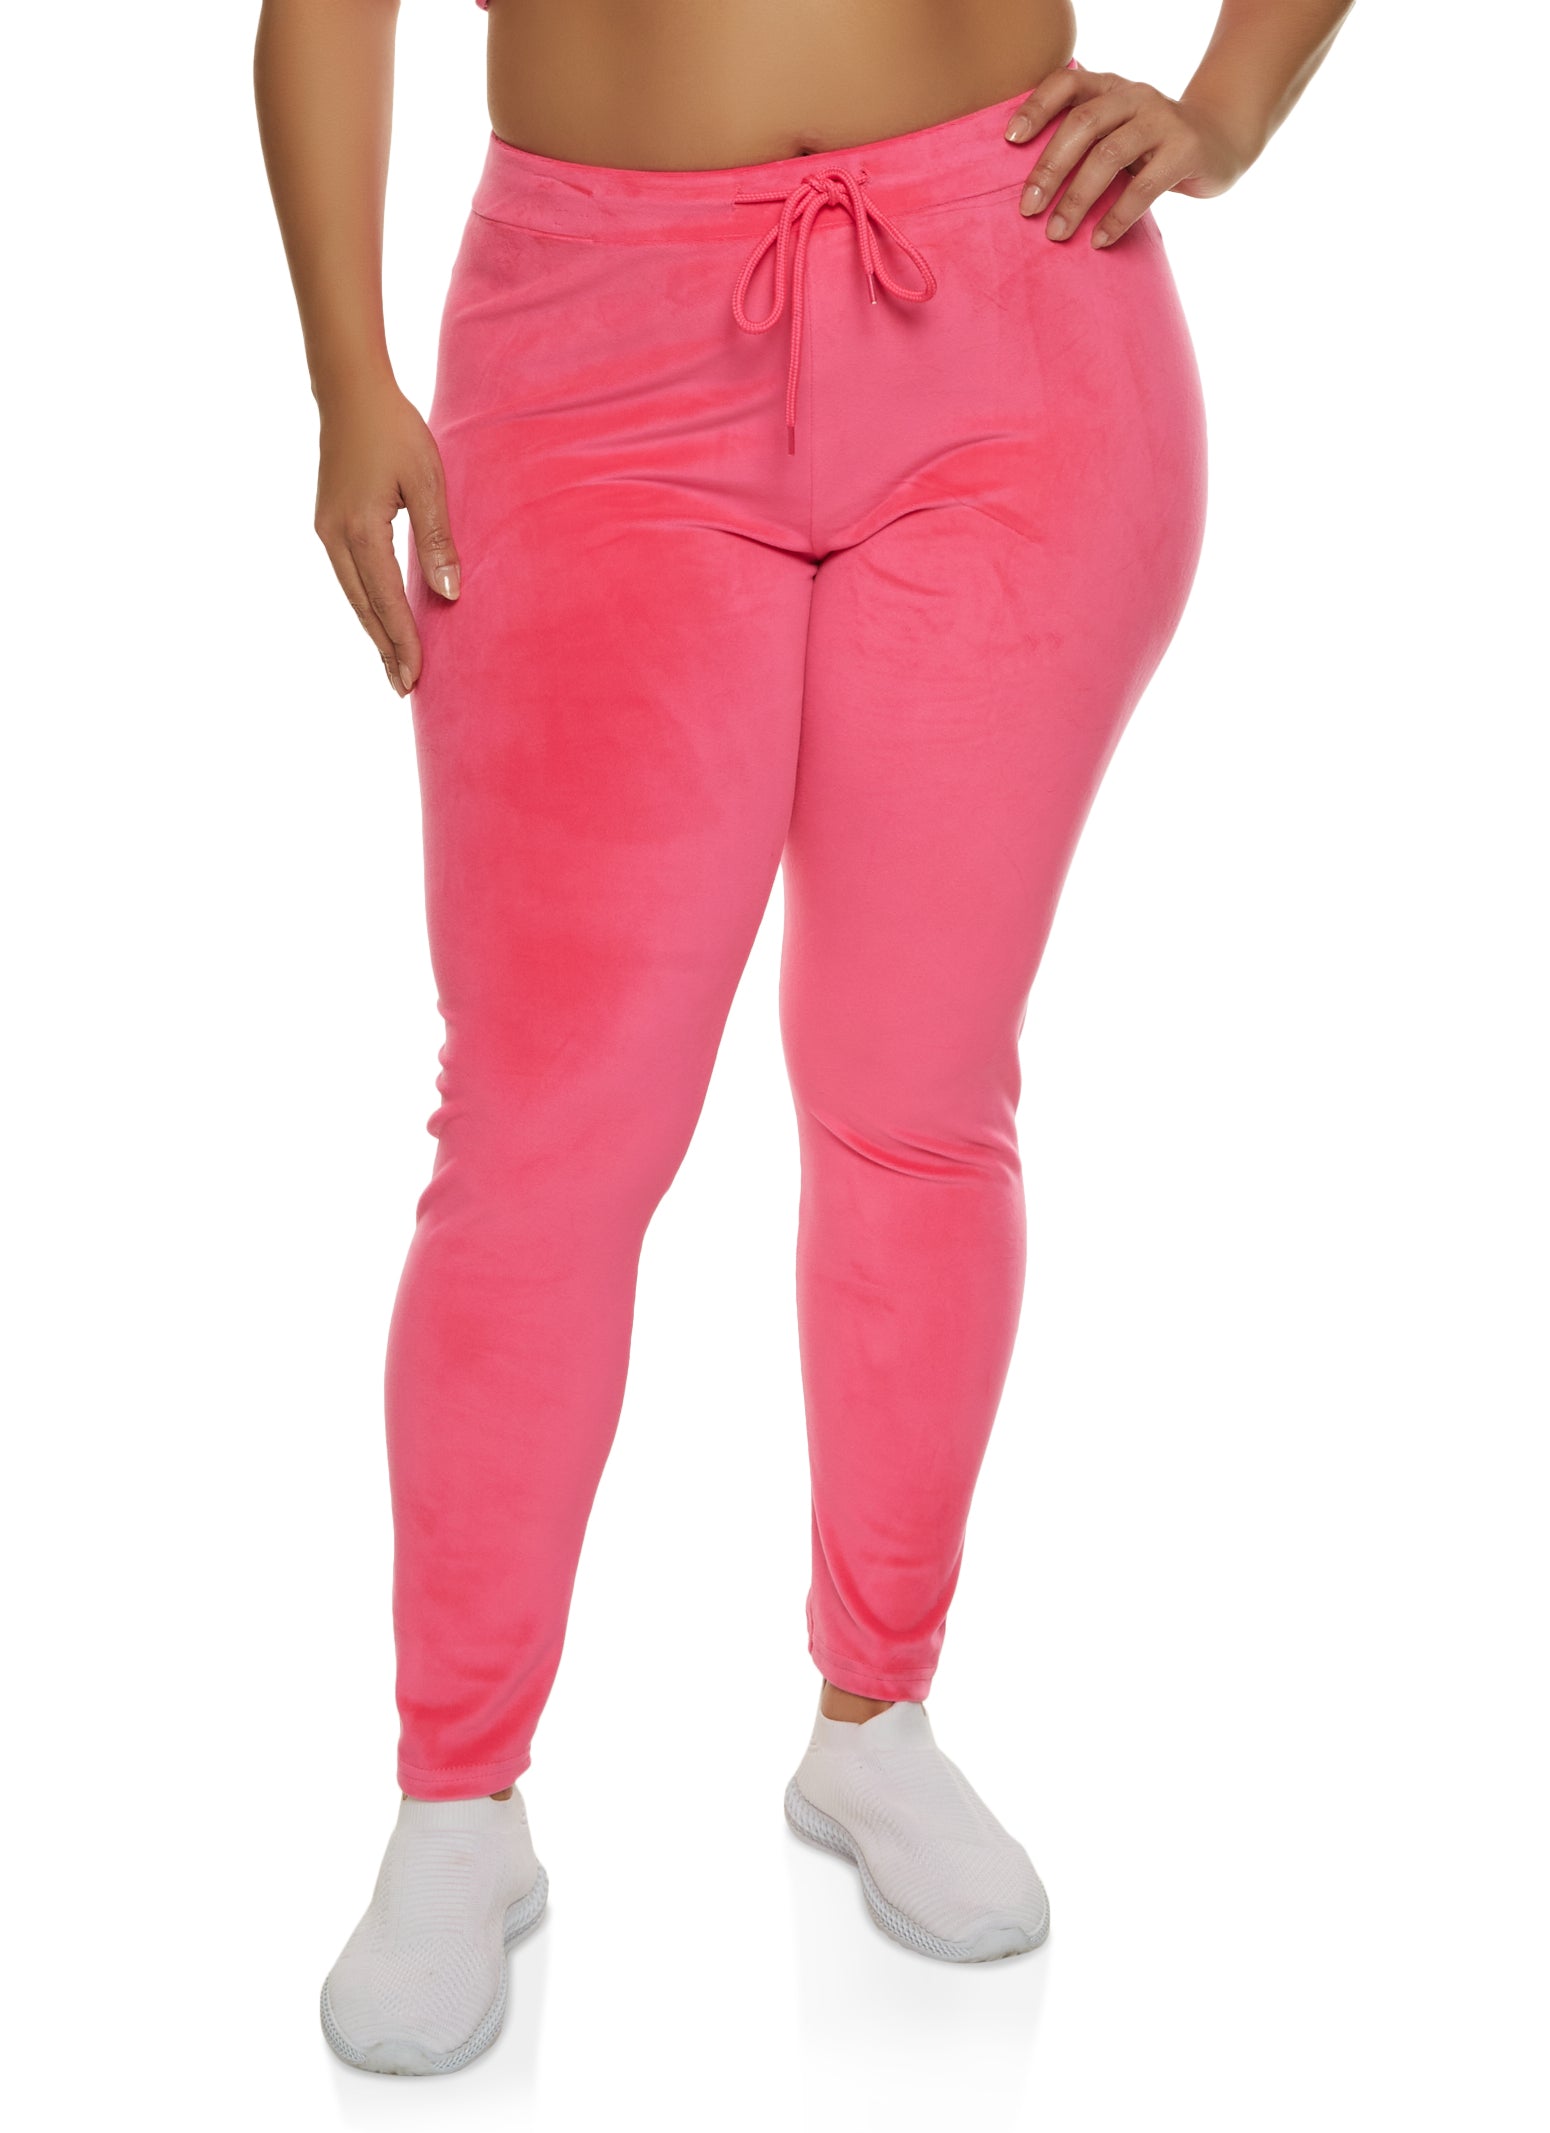 InterestPrint Pink Pet paw Print on Women Outdoor Leggings Plus Size:XXS-5XL  : : Clothing, Shoes & Accessories